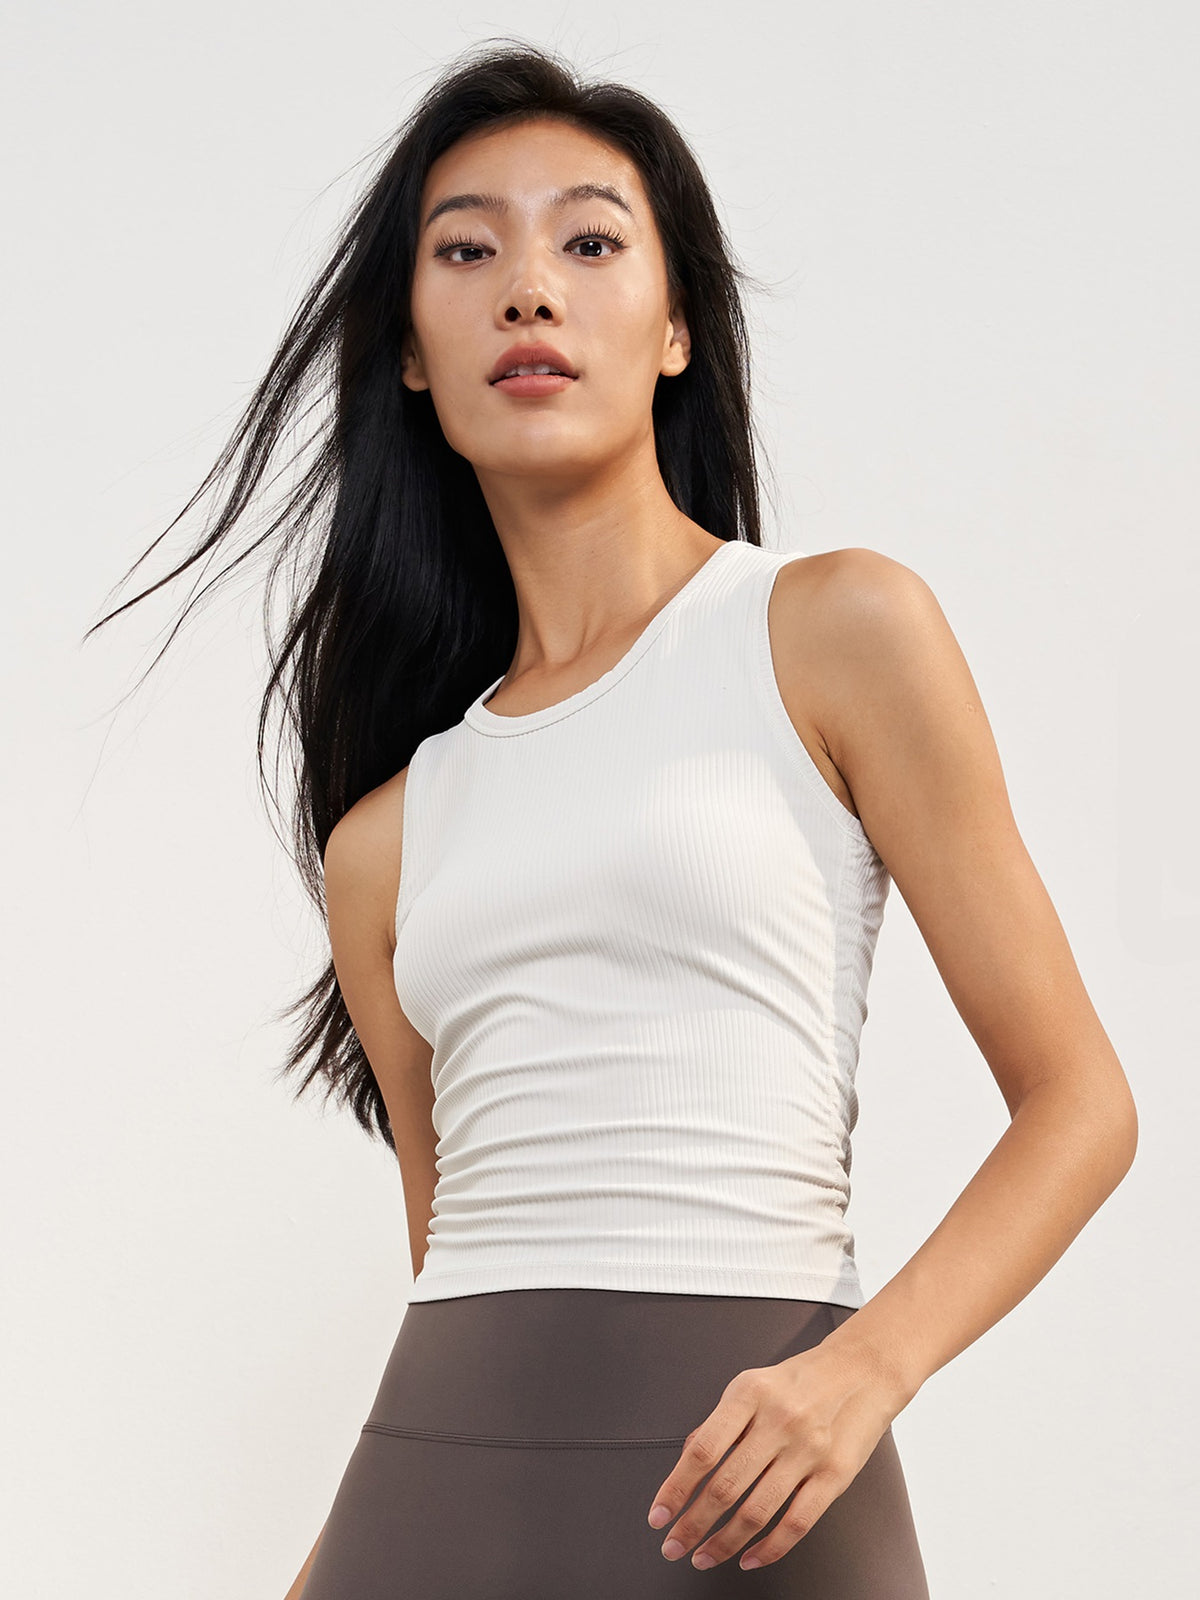 Women's ribbed slim yoga sports T-shirt with slim waist and round neck sports top sleeveless bottom Fitness vest